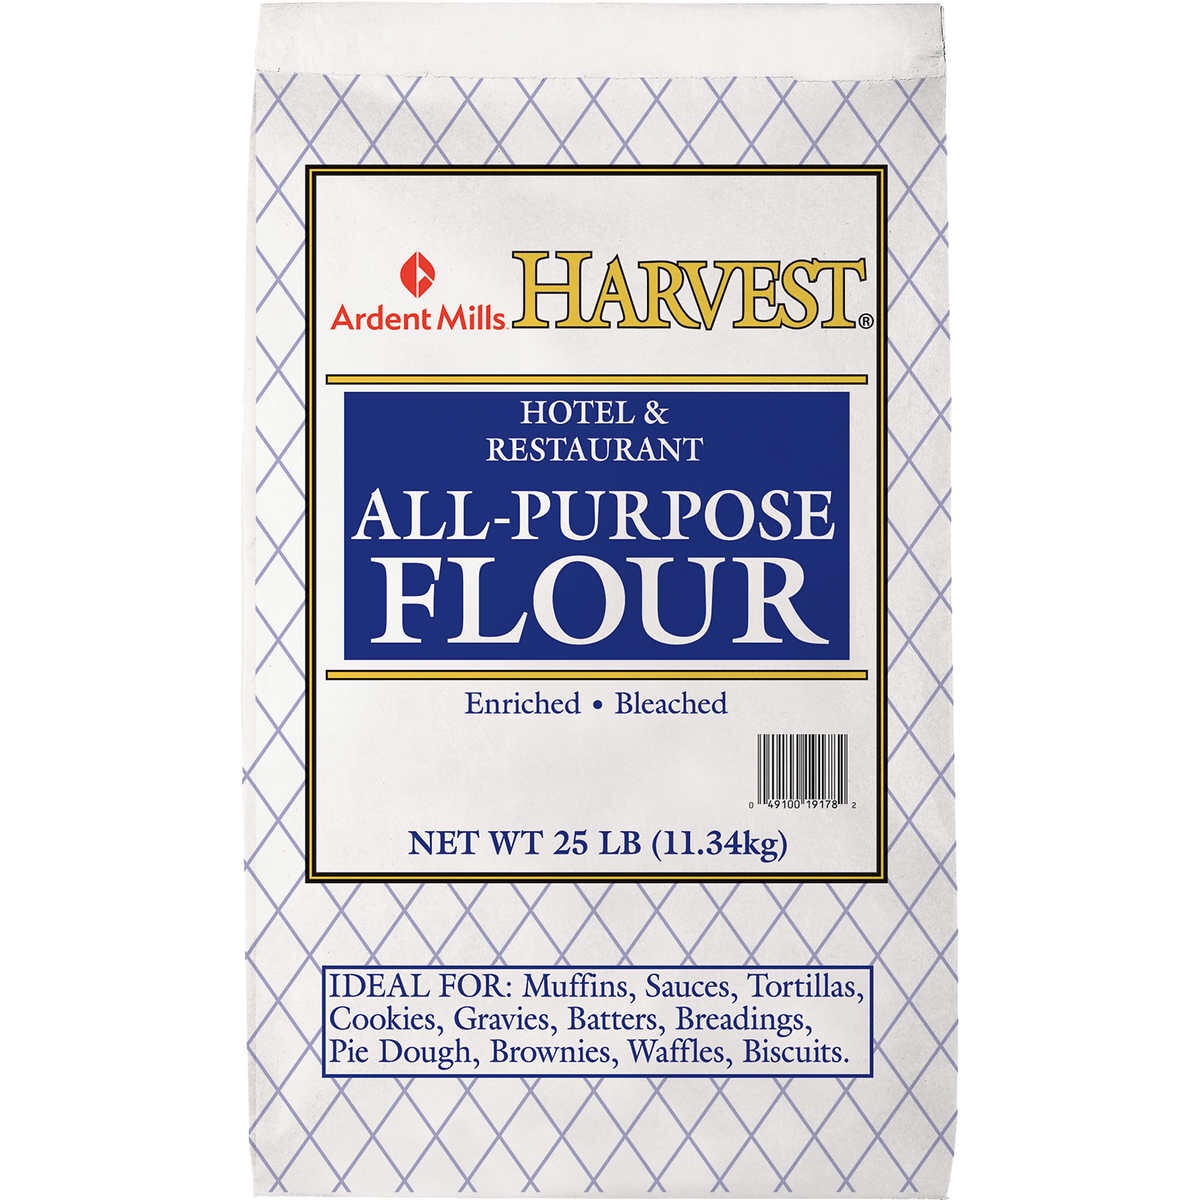 Ardent Mills Harvest Hotel & Restaurant All-Purpose Flour, 25 lbs 中筋面粉25磅